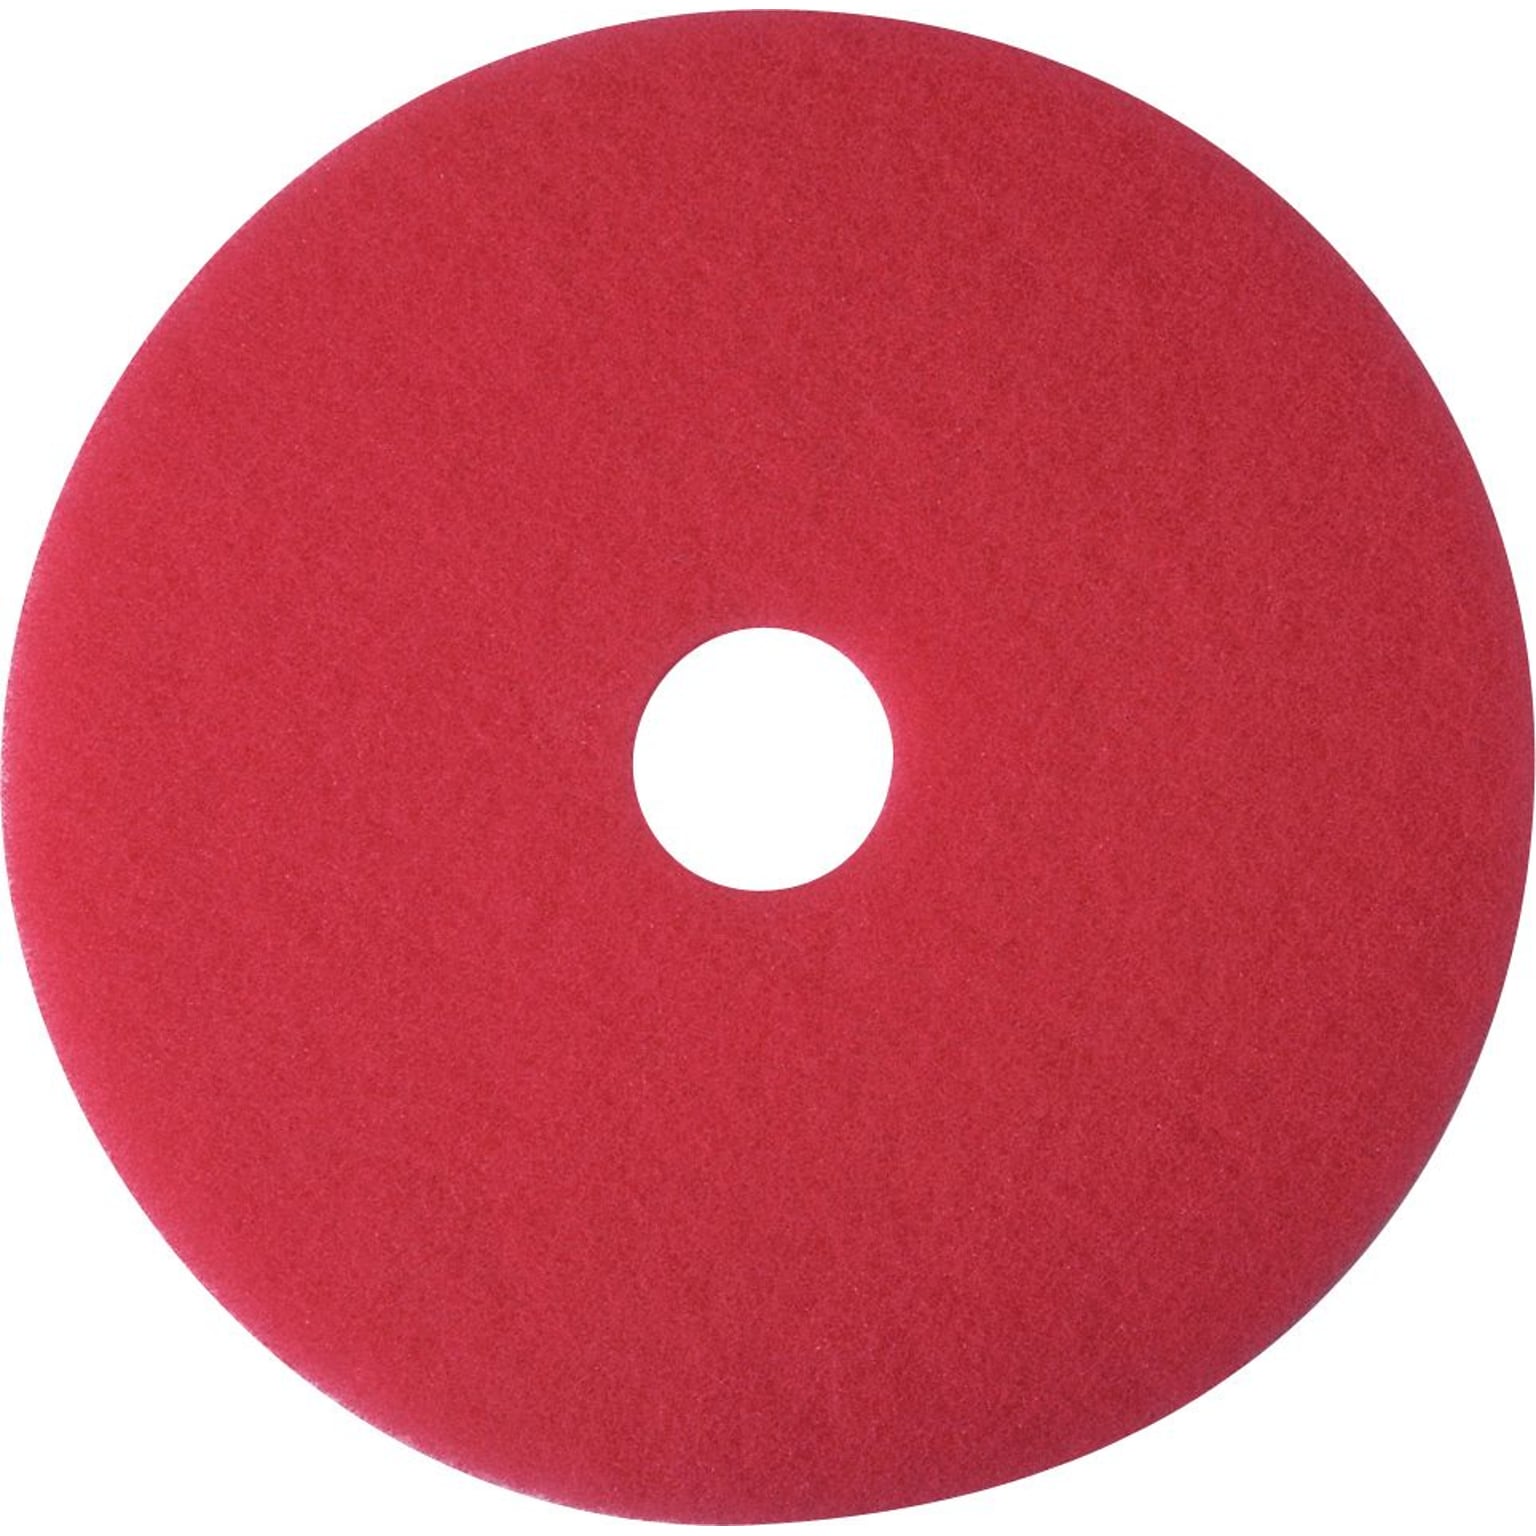 3M 14 Buffing Floor Pad, Pink, 5/Carton (510014)